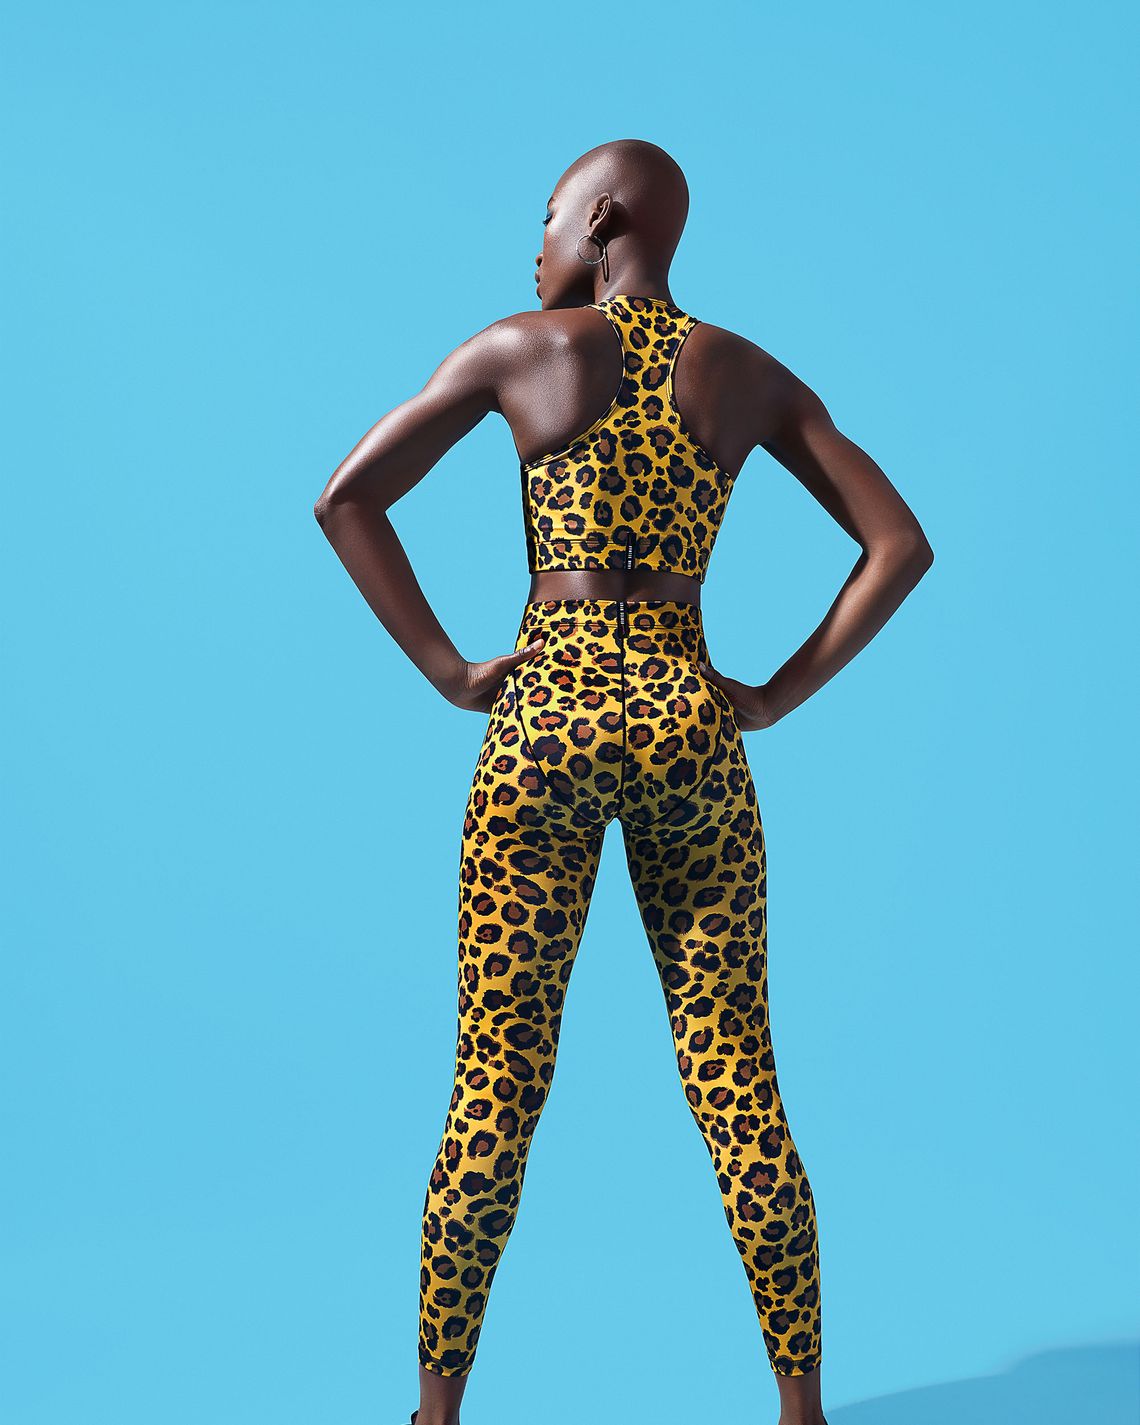 French Cut leopard-print leggings in black - Adam Selman Sport